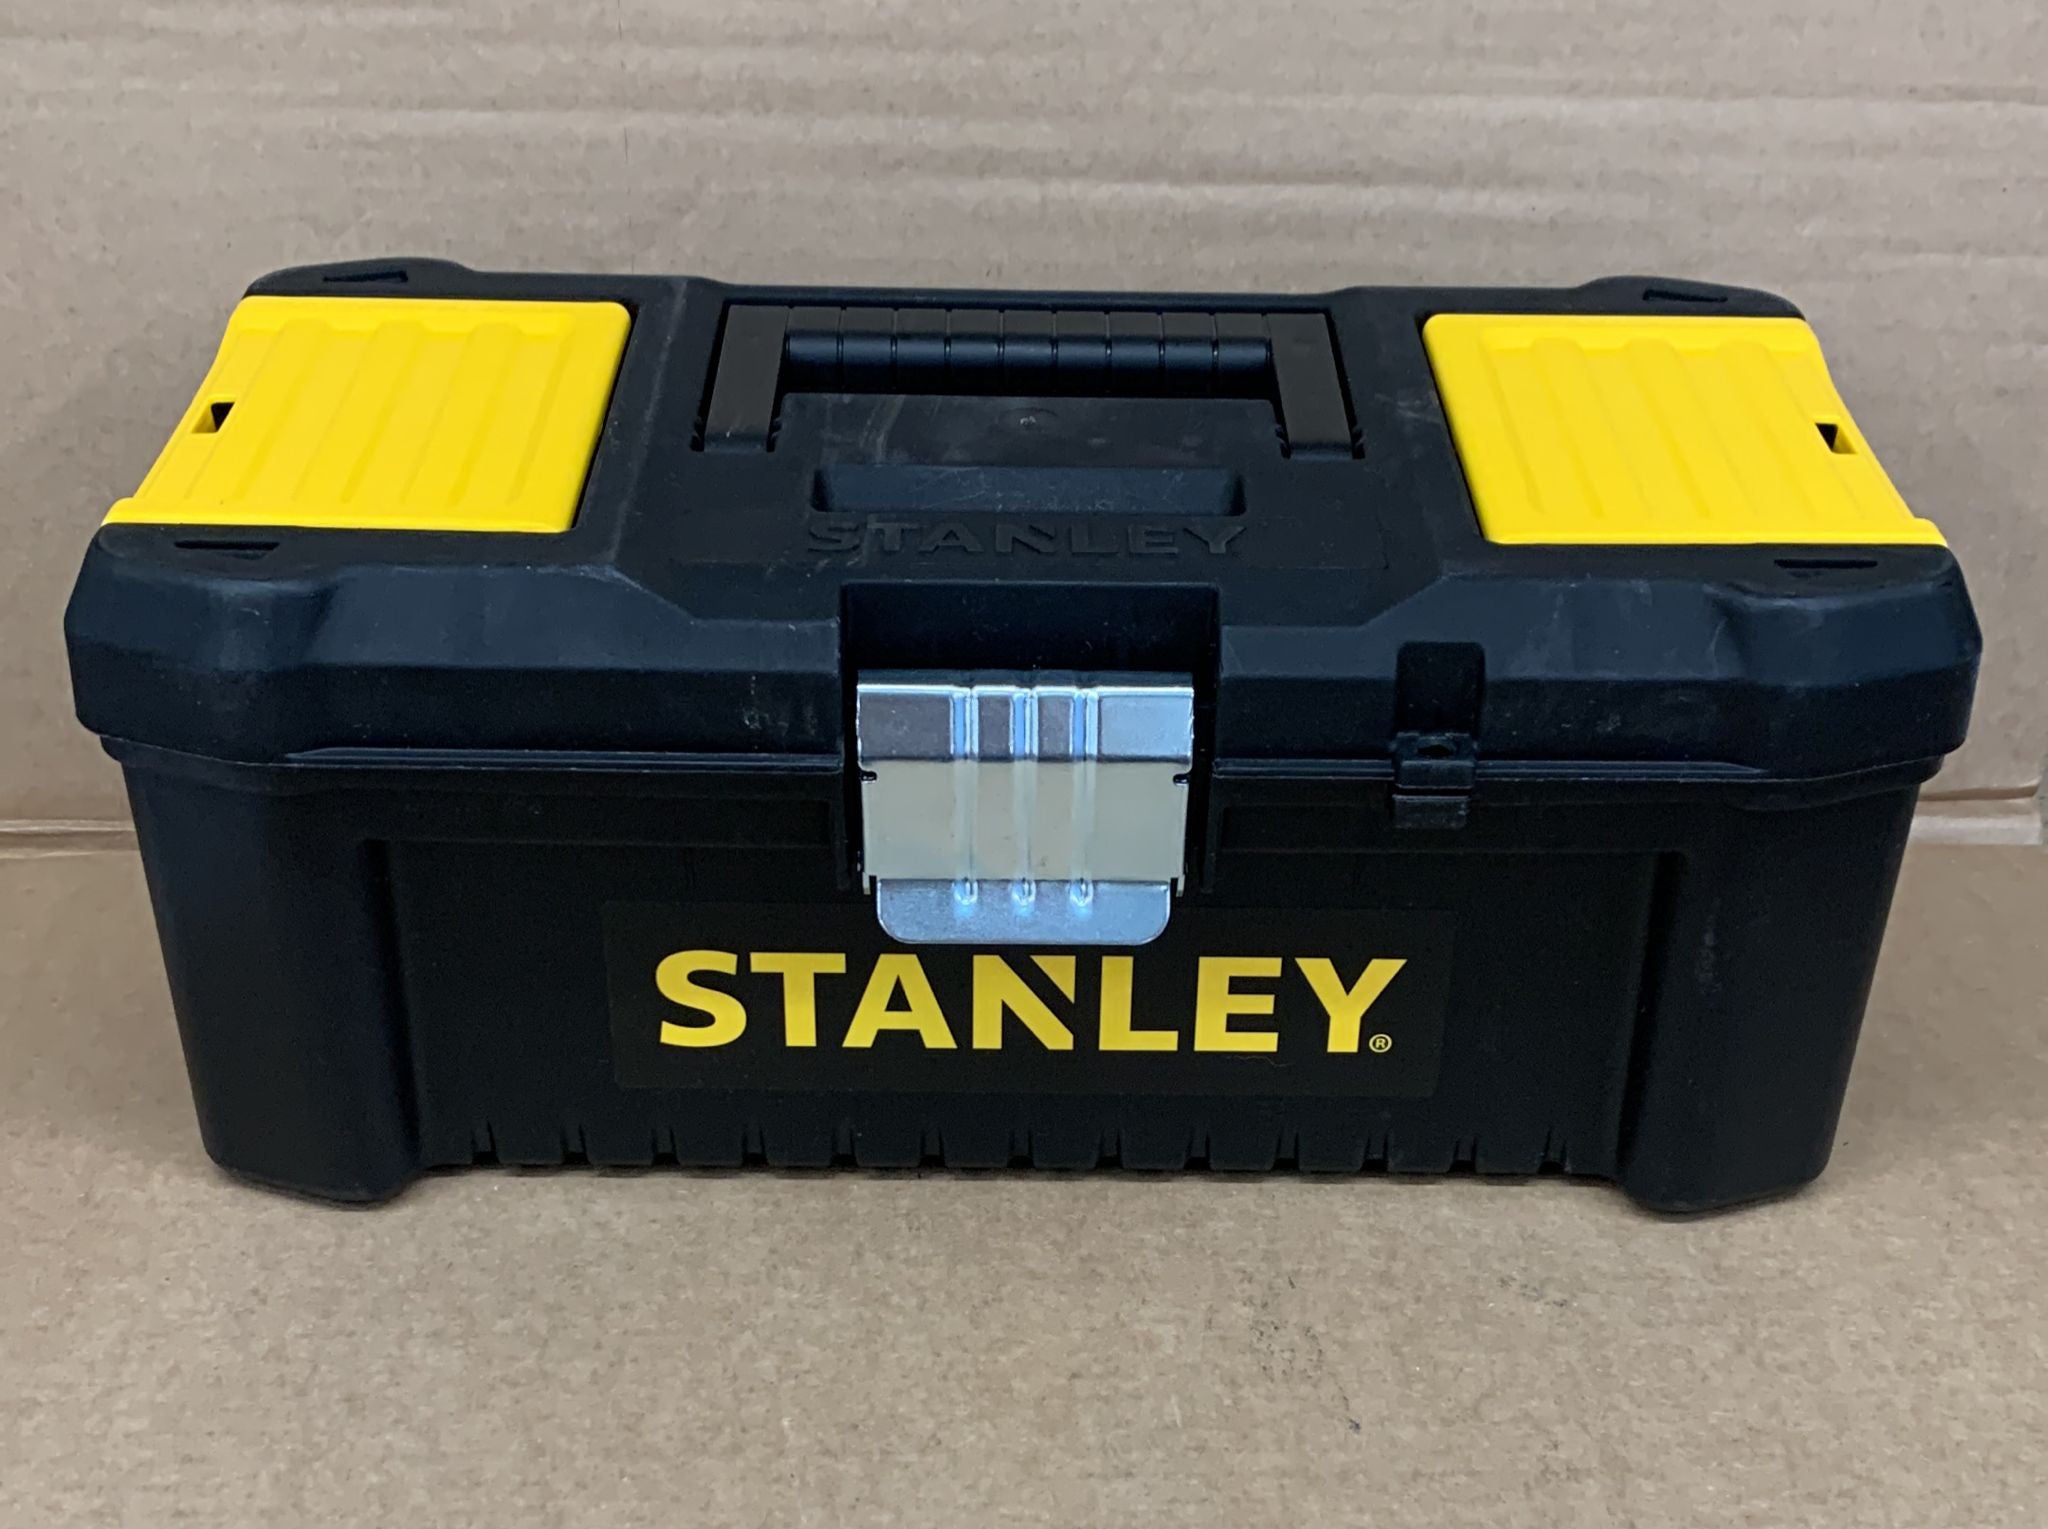 Stanley Toolbox "Essential STST1-75515 -5156